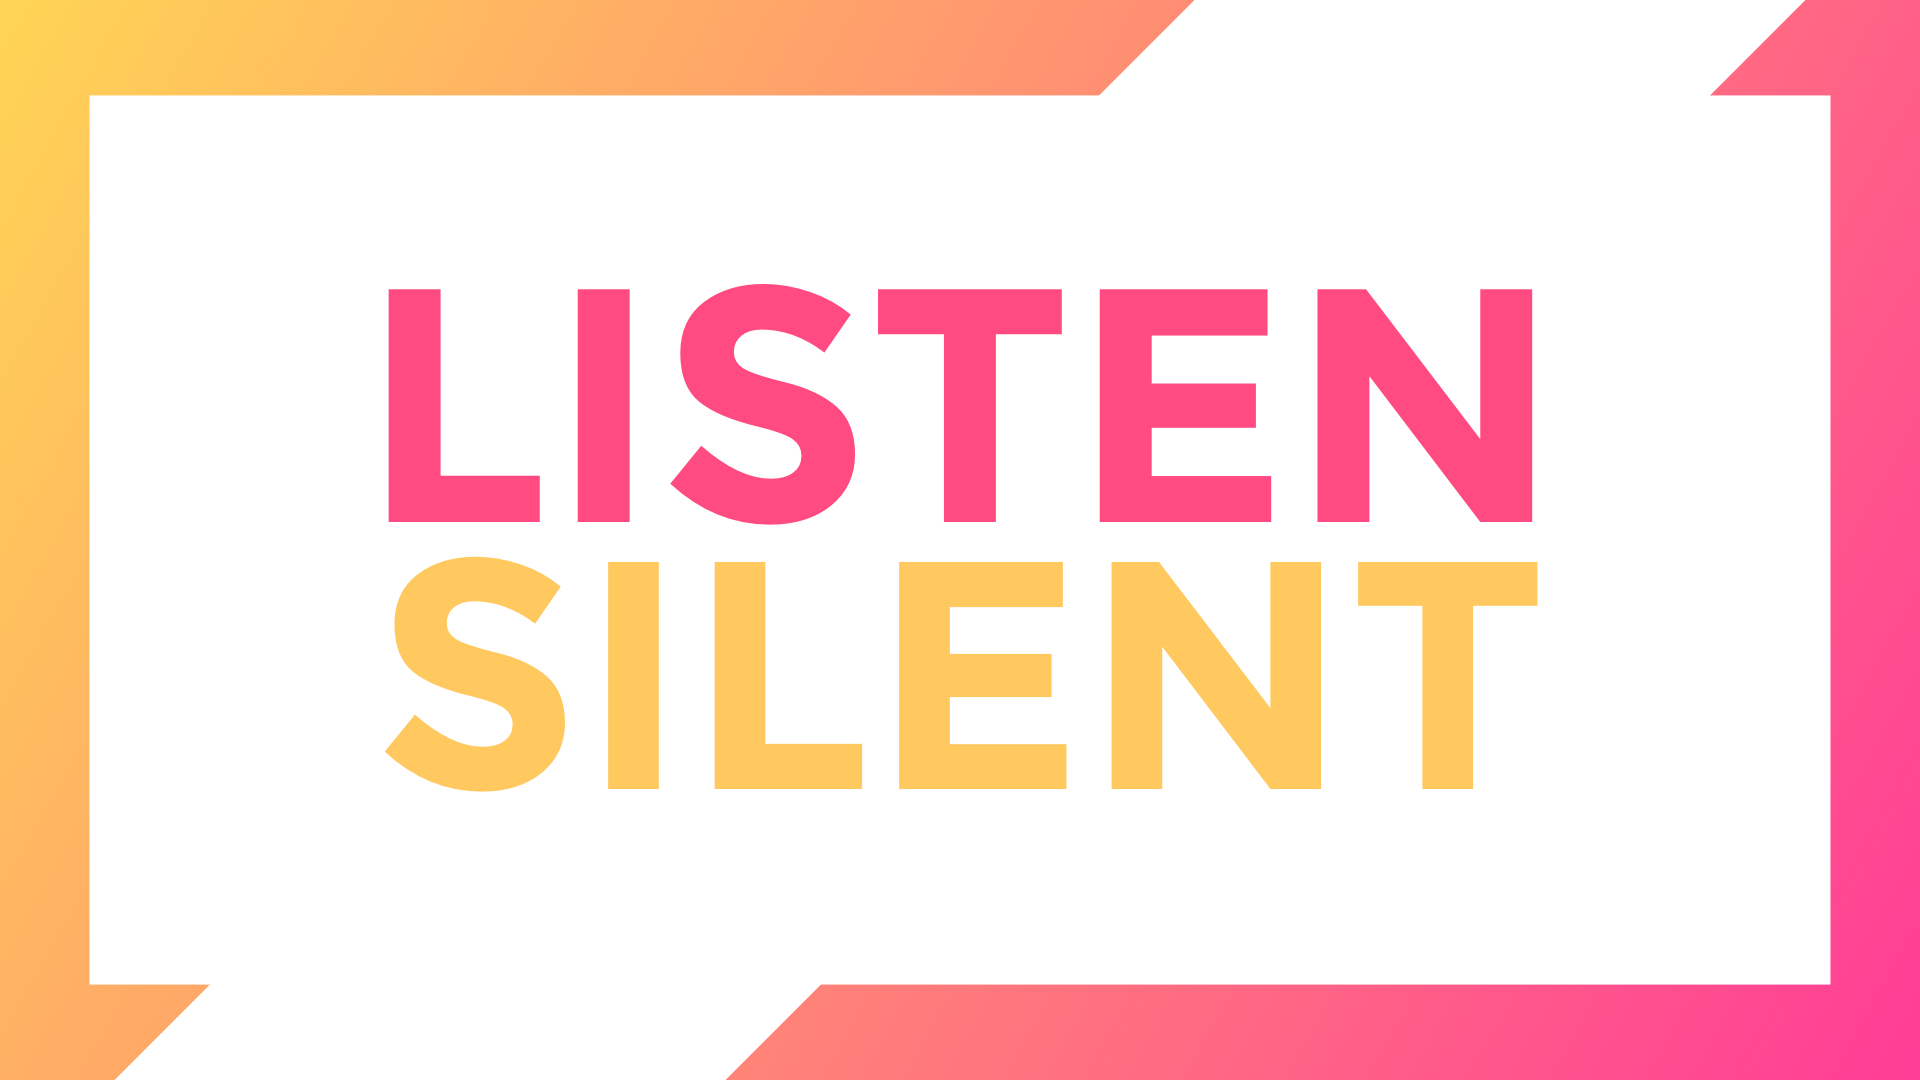 Listen by being Silent